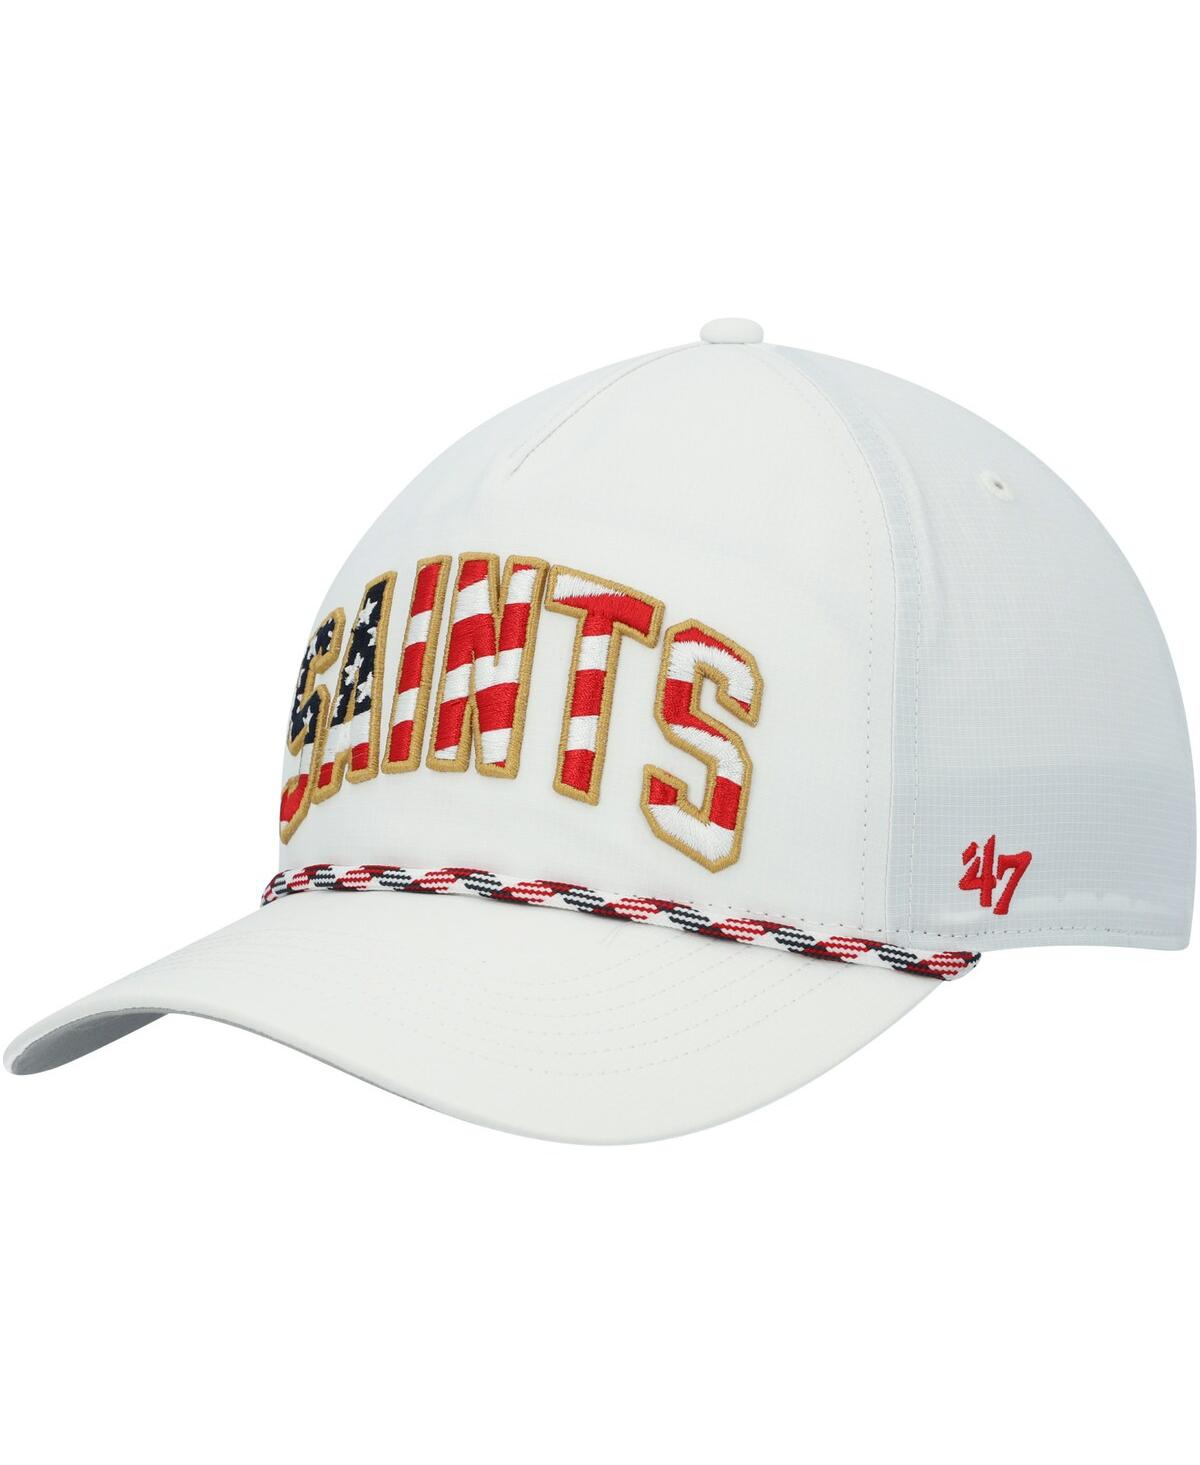 47 Brand Trucker Adjustable Hat